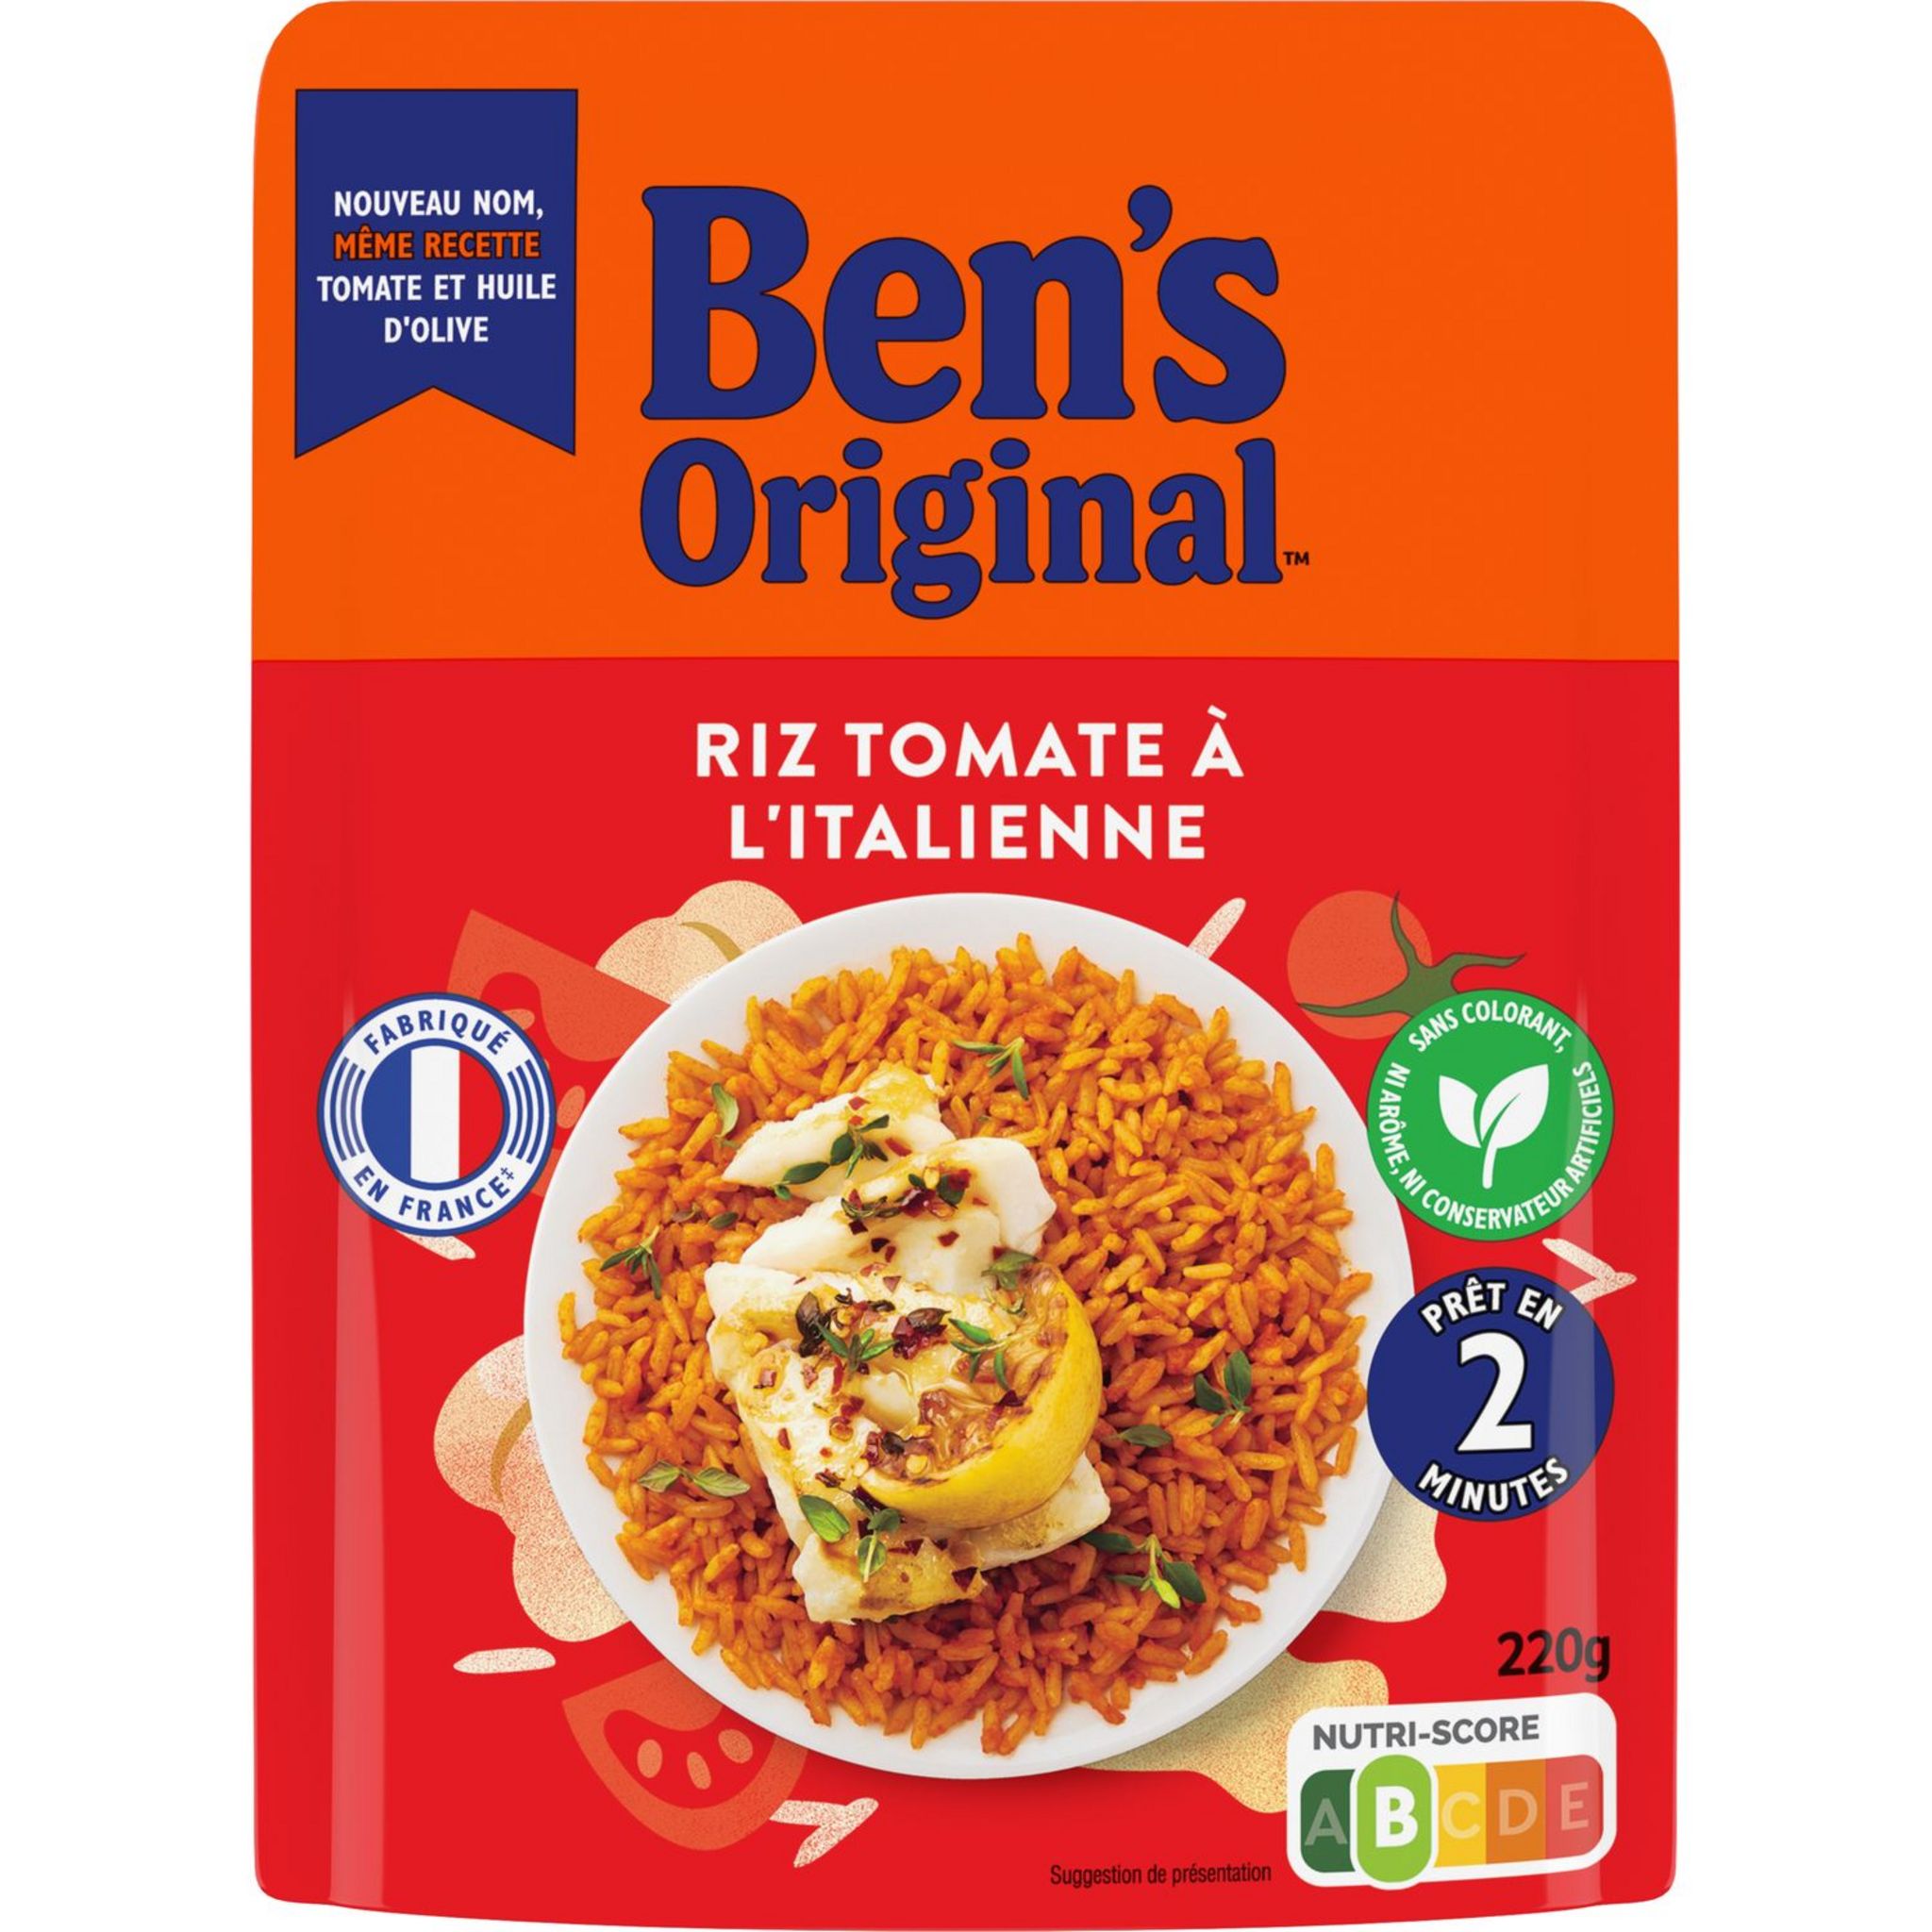 Uncle Ben's - Riz Tomate et Huile d'Olive - 250g